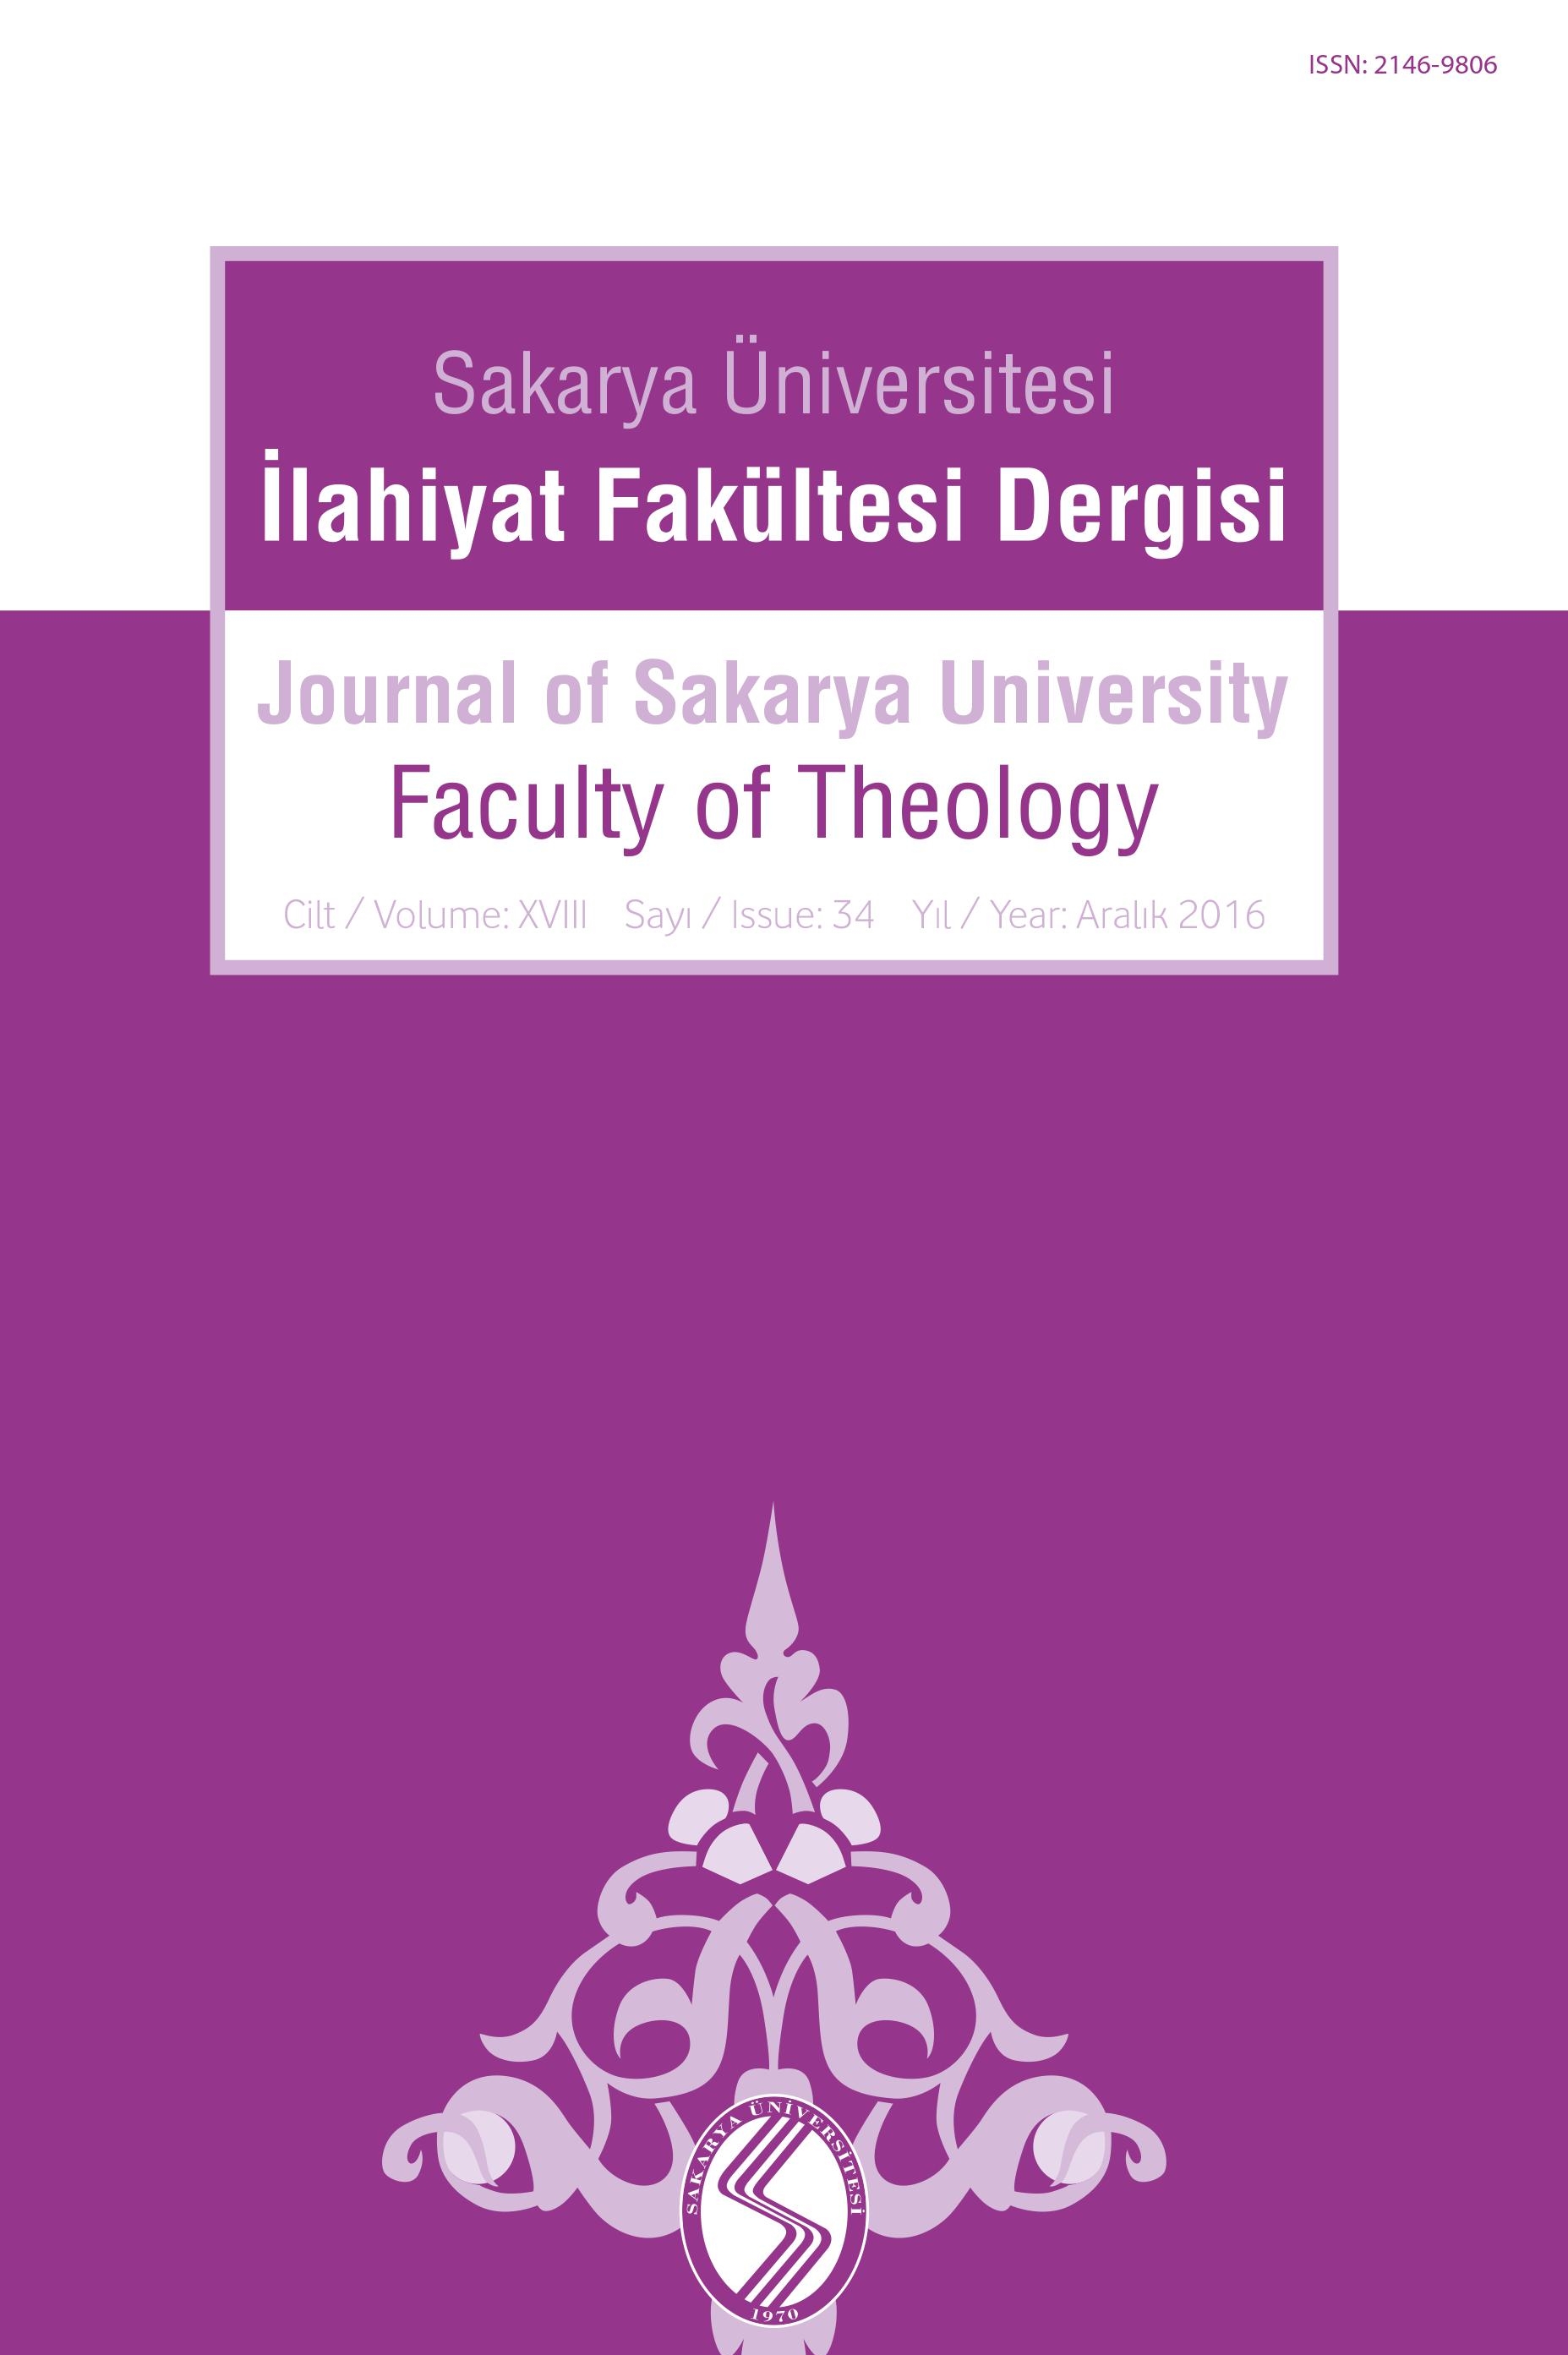 The Main Doctrines of Ibāḍīyya in the Context of An Ibāḍī Scholar Abū Ya‘qūb al-Warjalānī’s Work al-Dalīl wa’l-burhān Cover Image